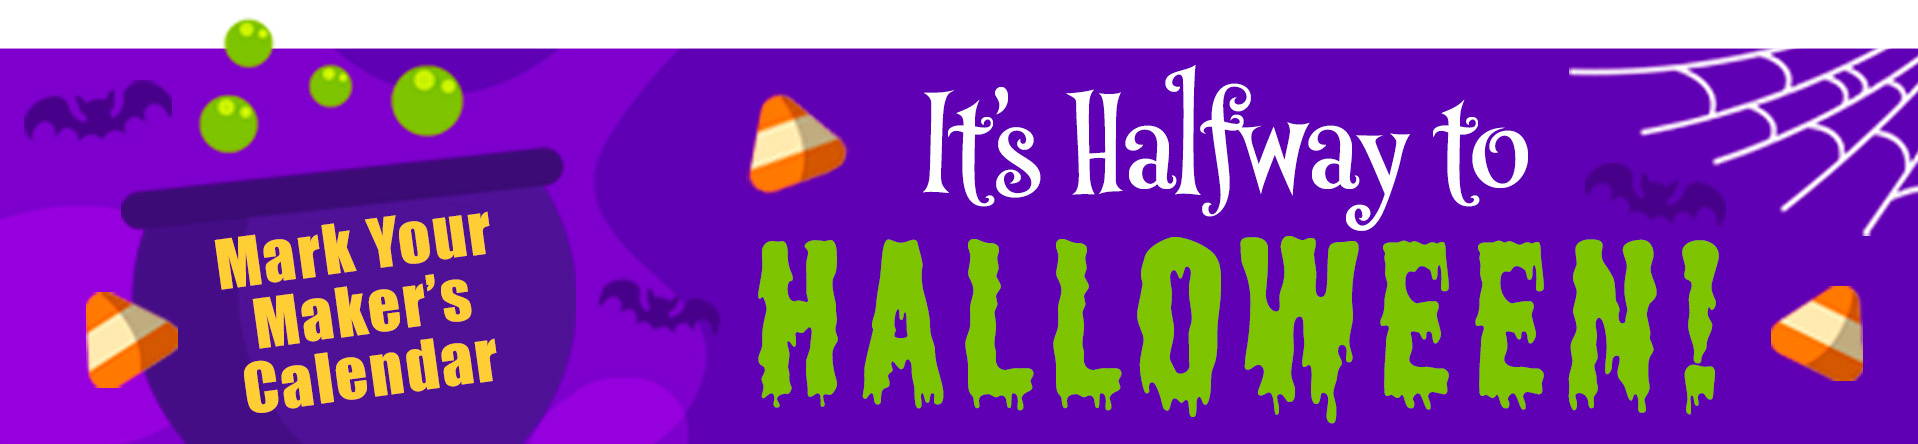 Mark your Maker's Calendar, It's Halfway to Halloween! Image: web, bats, cauldron, candy corn.